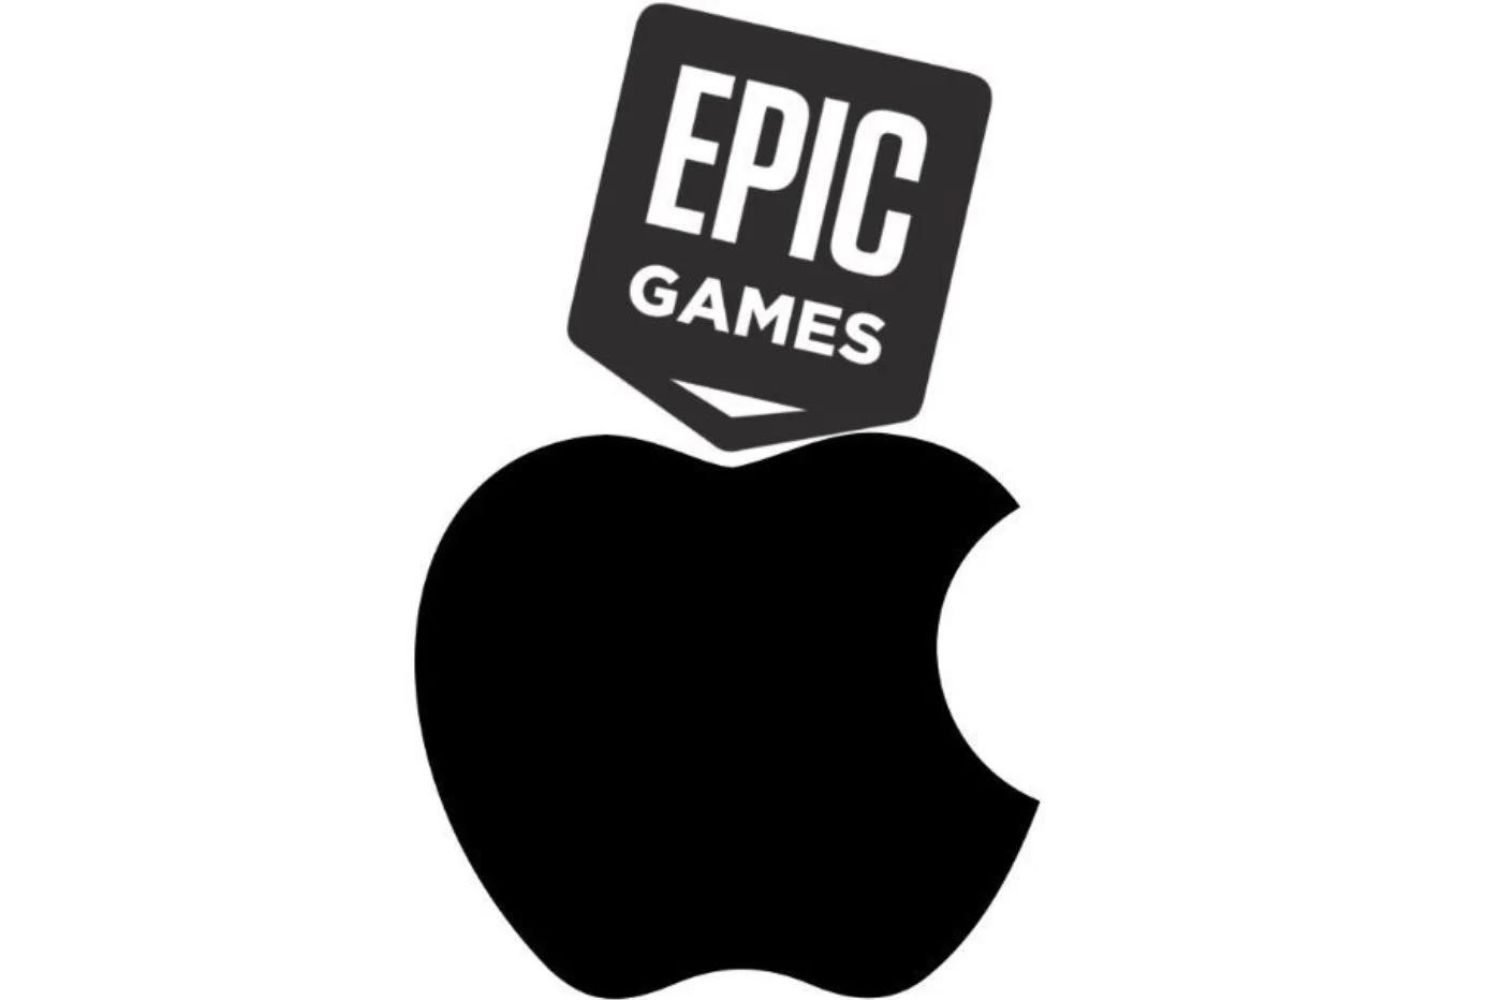 Epic Games Apple logo